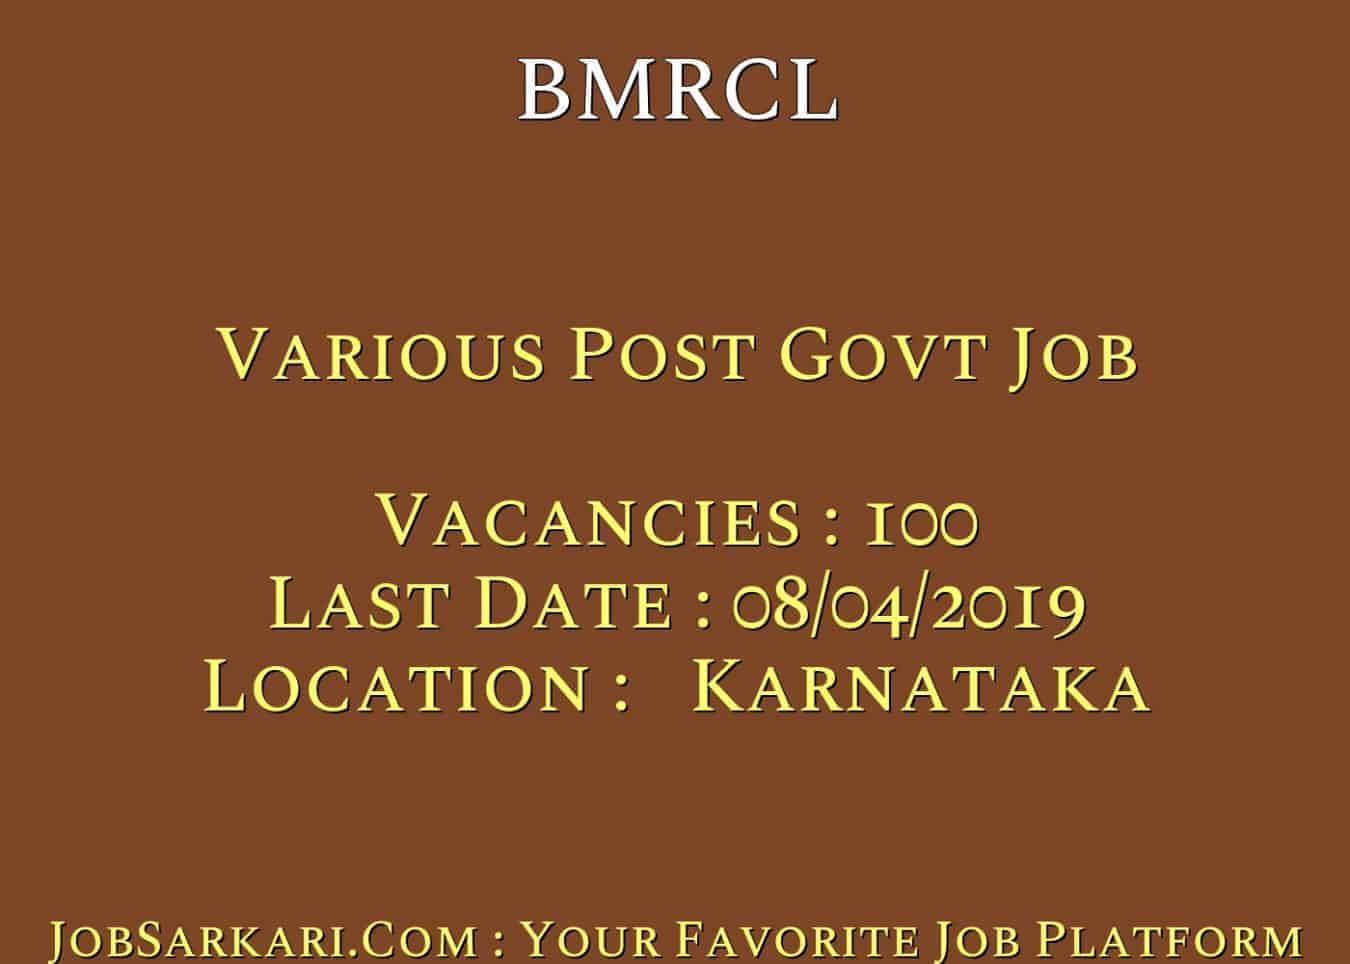 BMRCL Recruitment 2019 For Various Post Govt Job